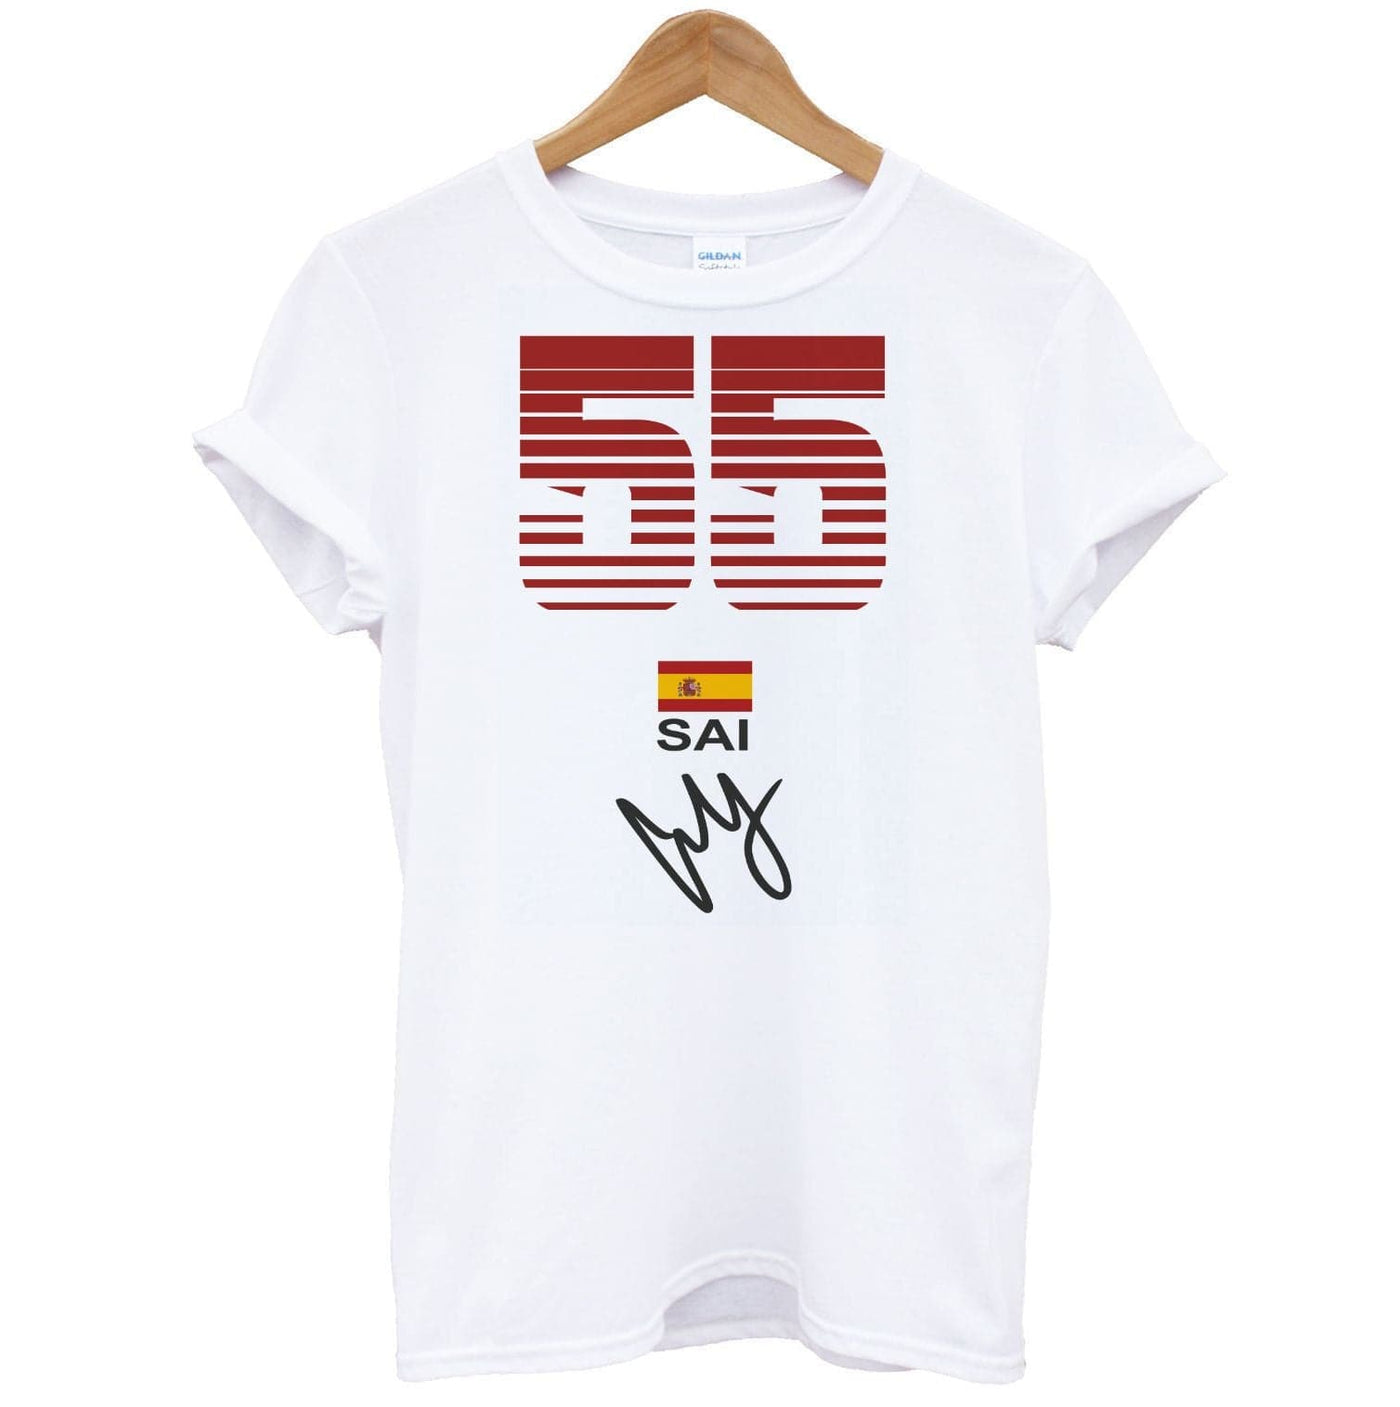 Carlos Sainz - F1 T-Shirt